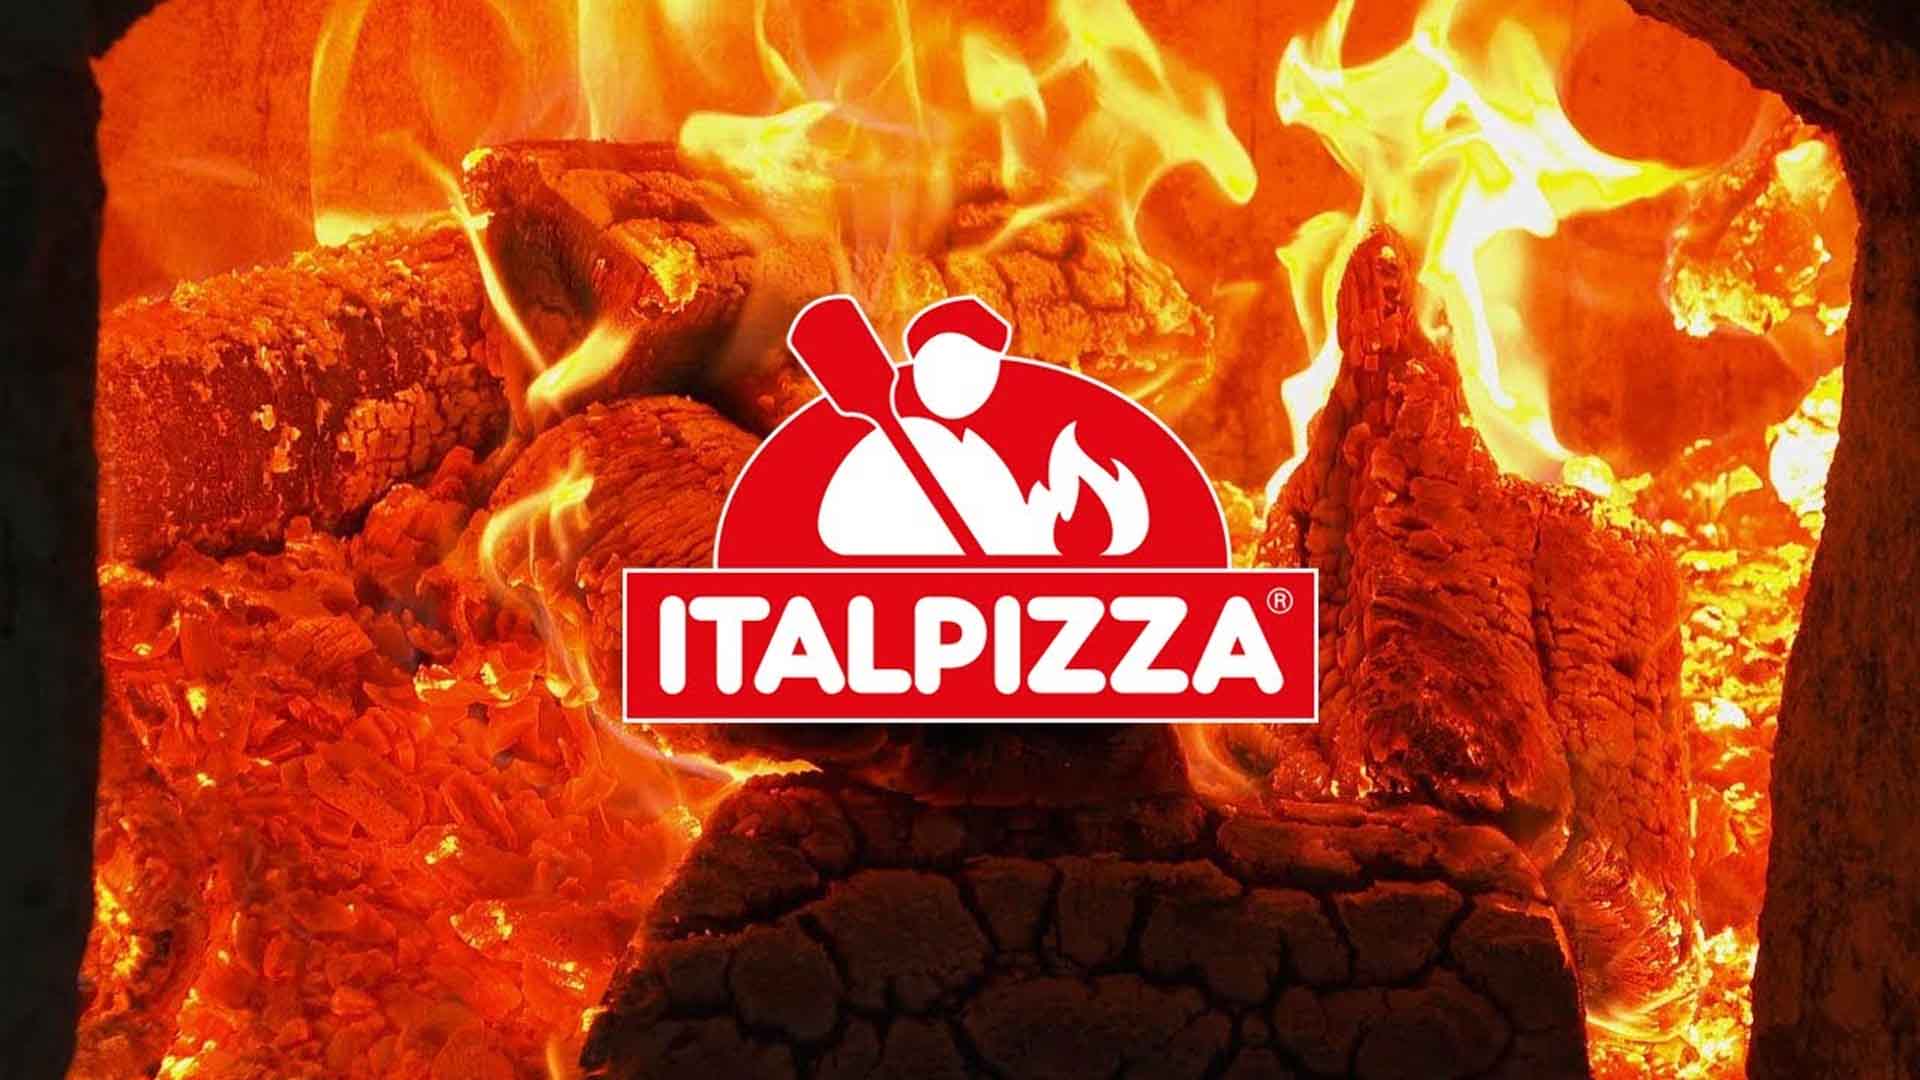 ItalPizza